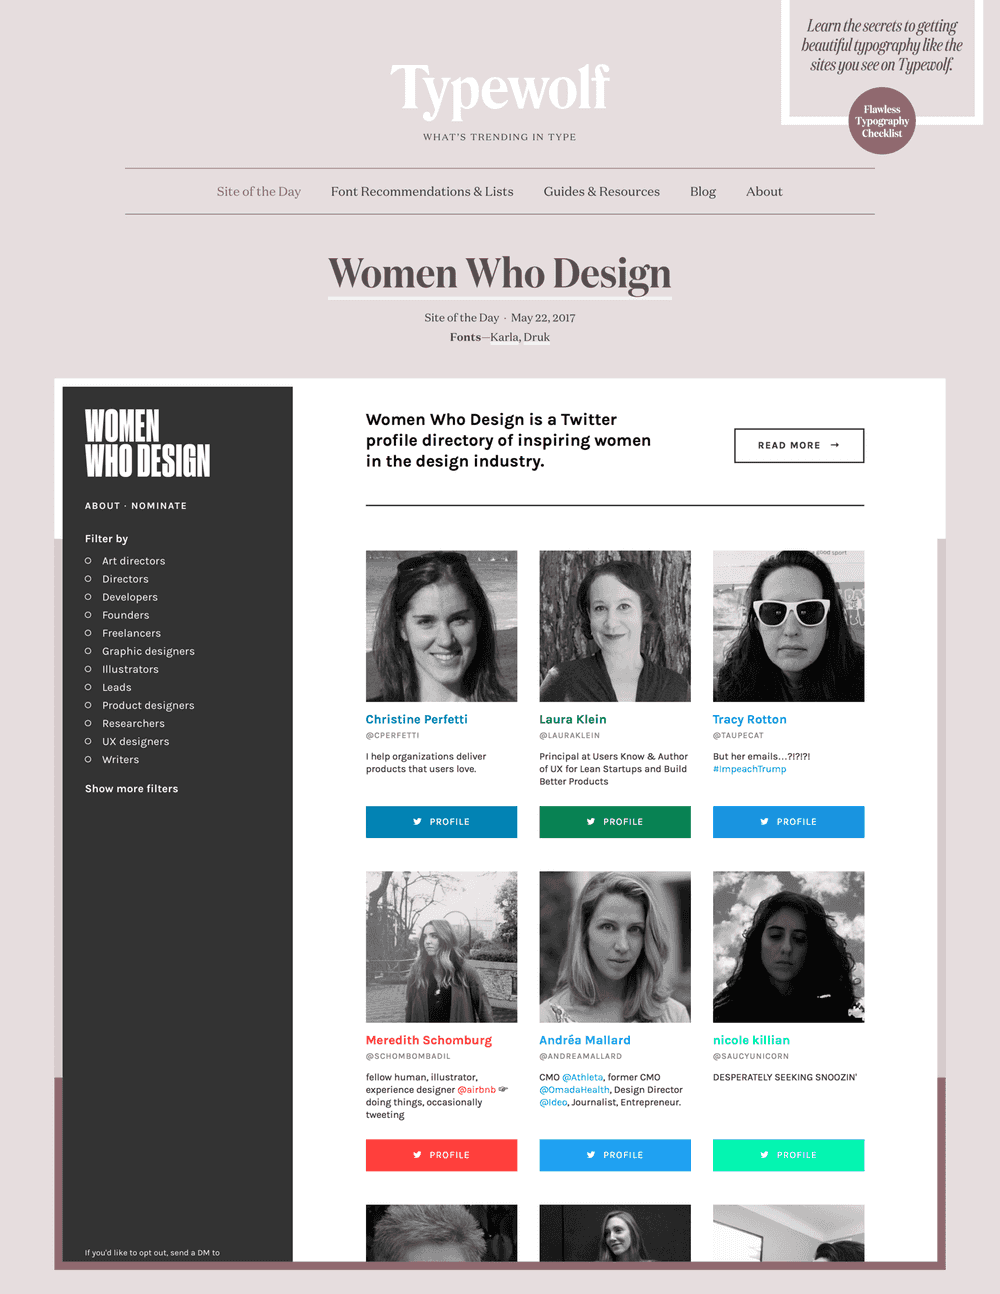 Women Who Design on Typewolf